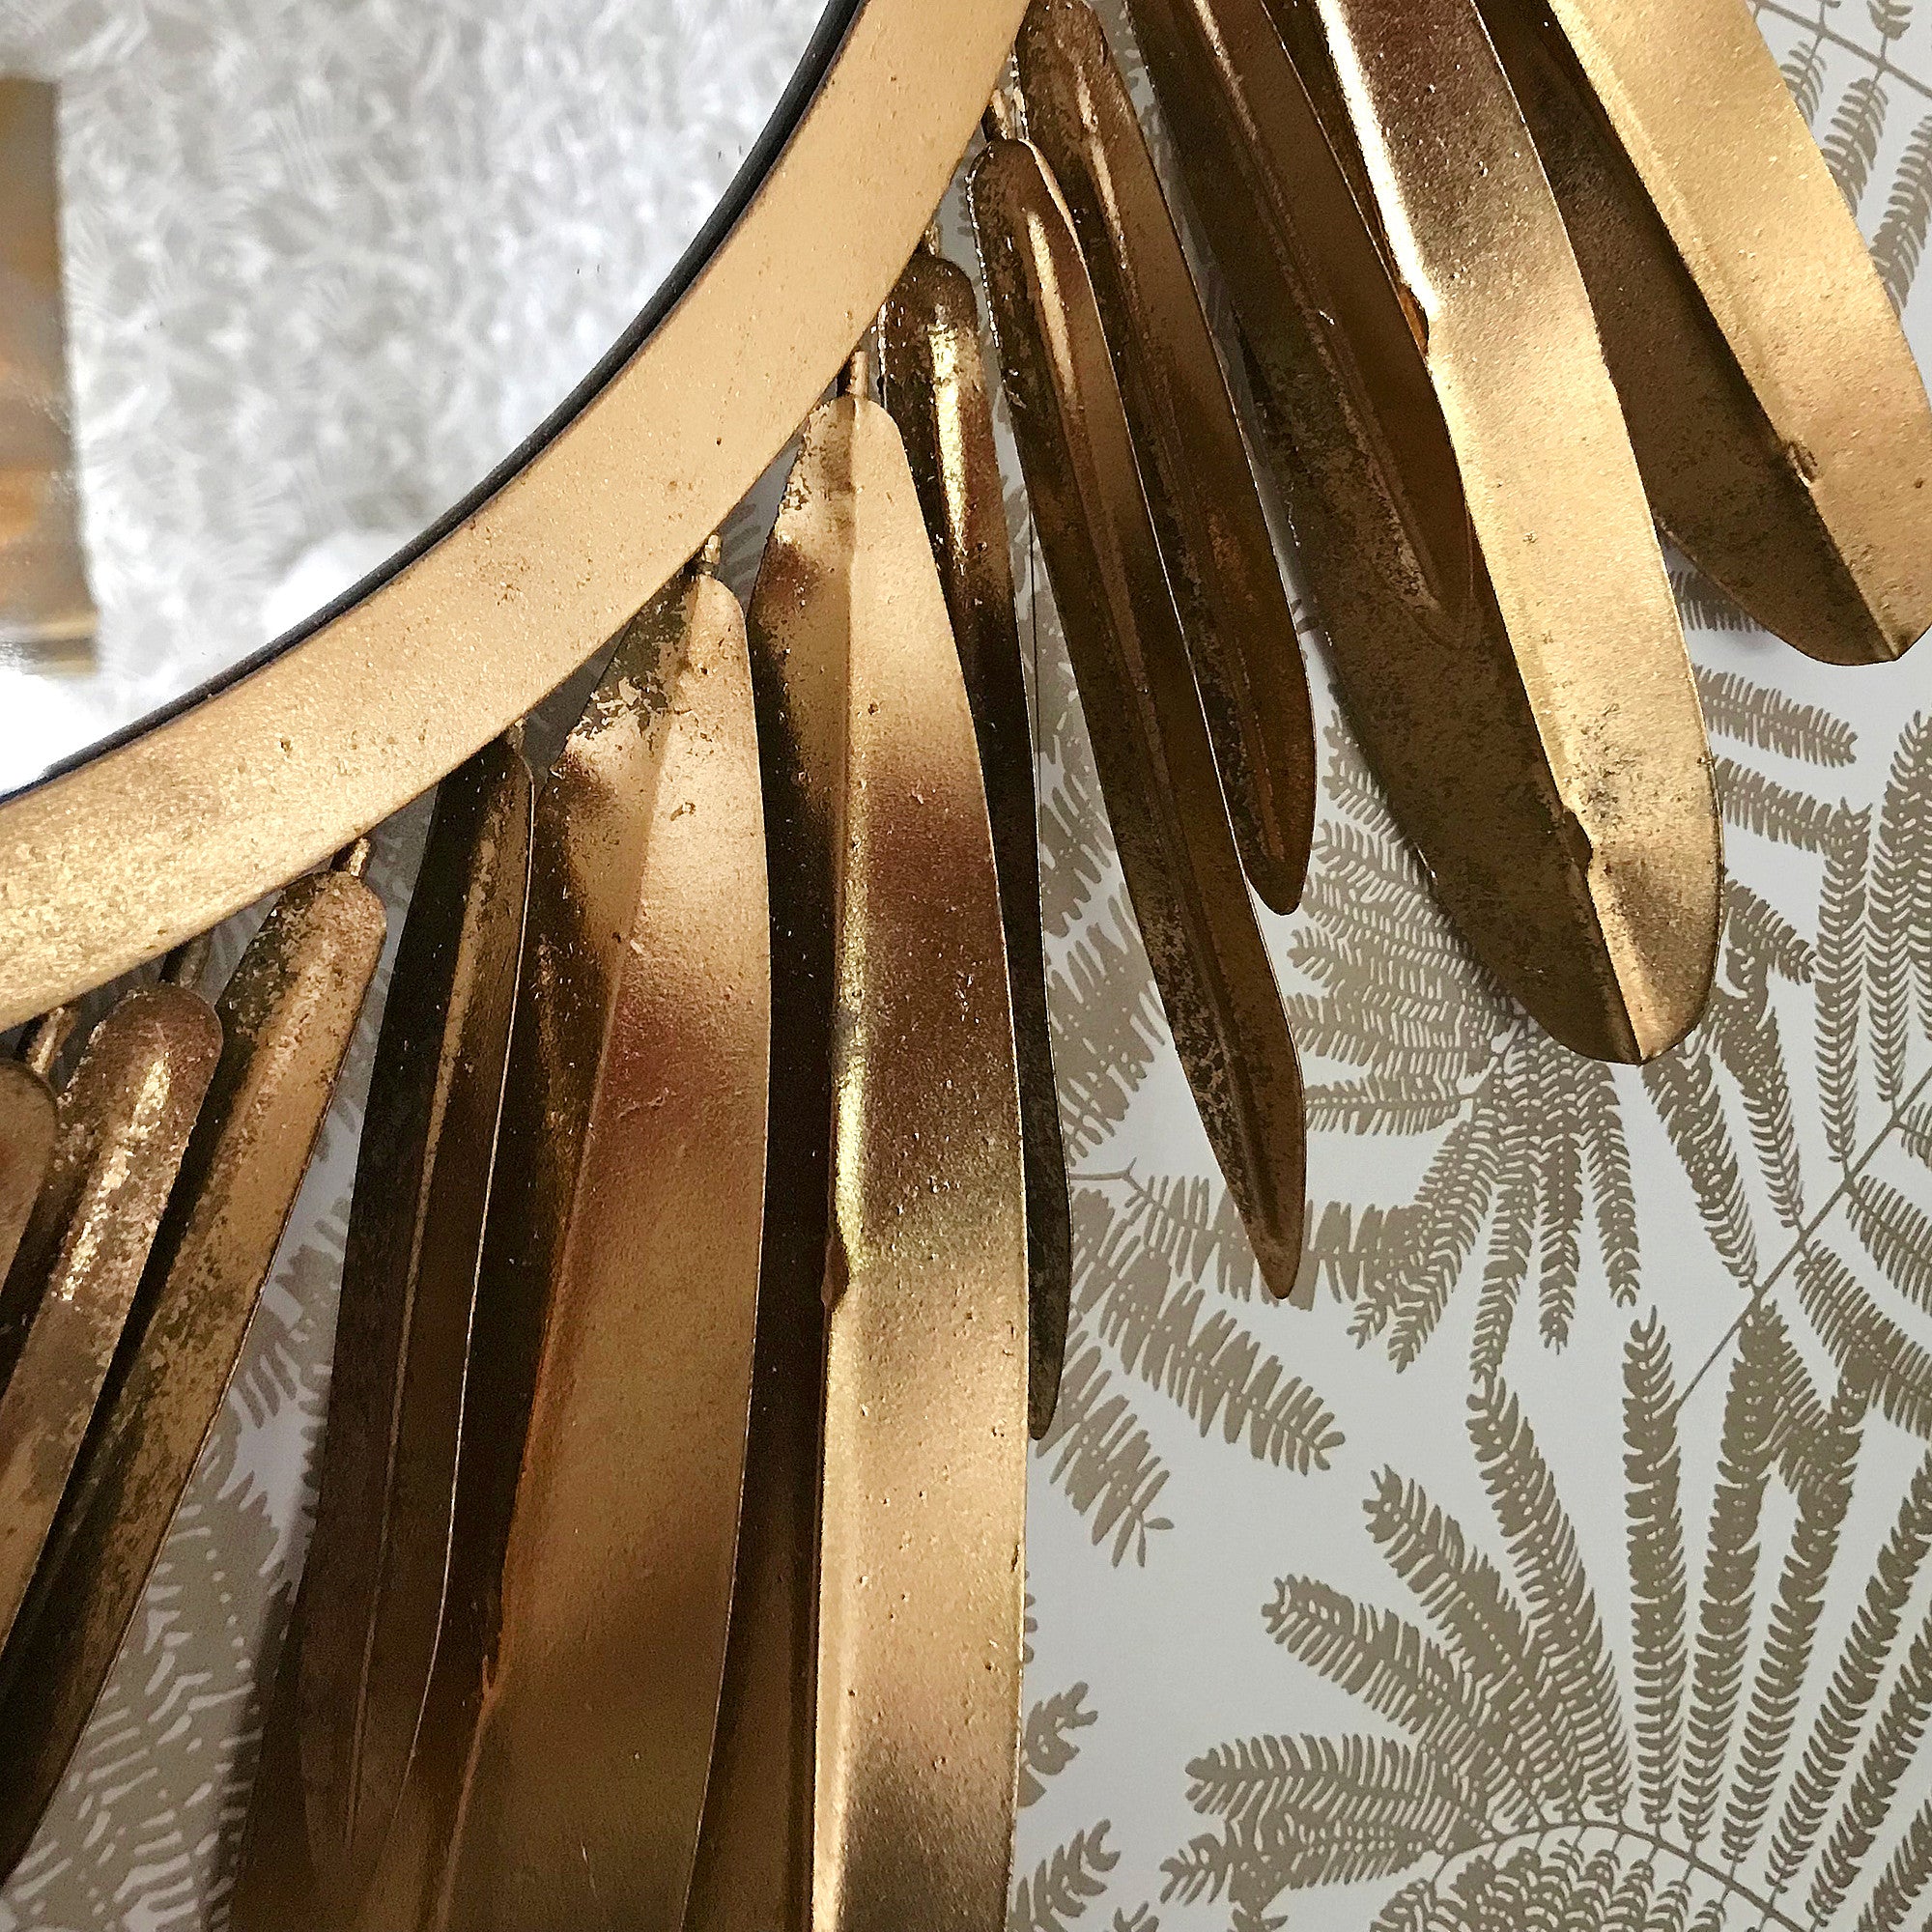 Golden Feather Mirror (Second - B)